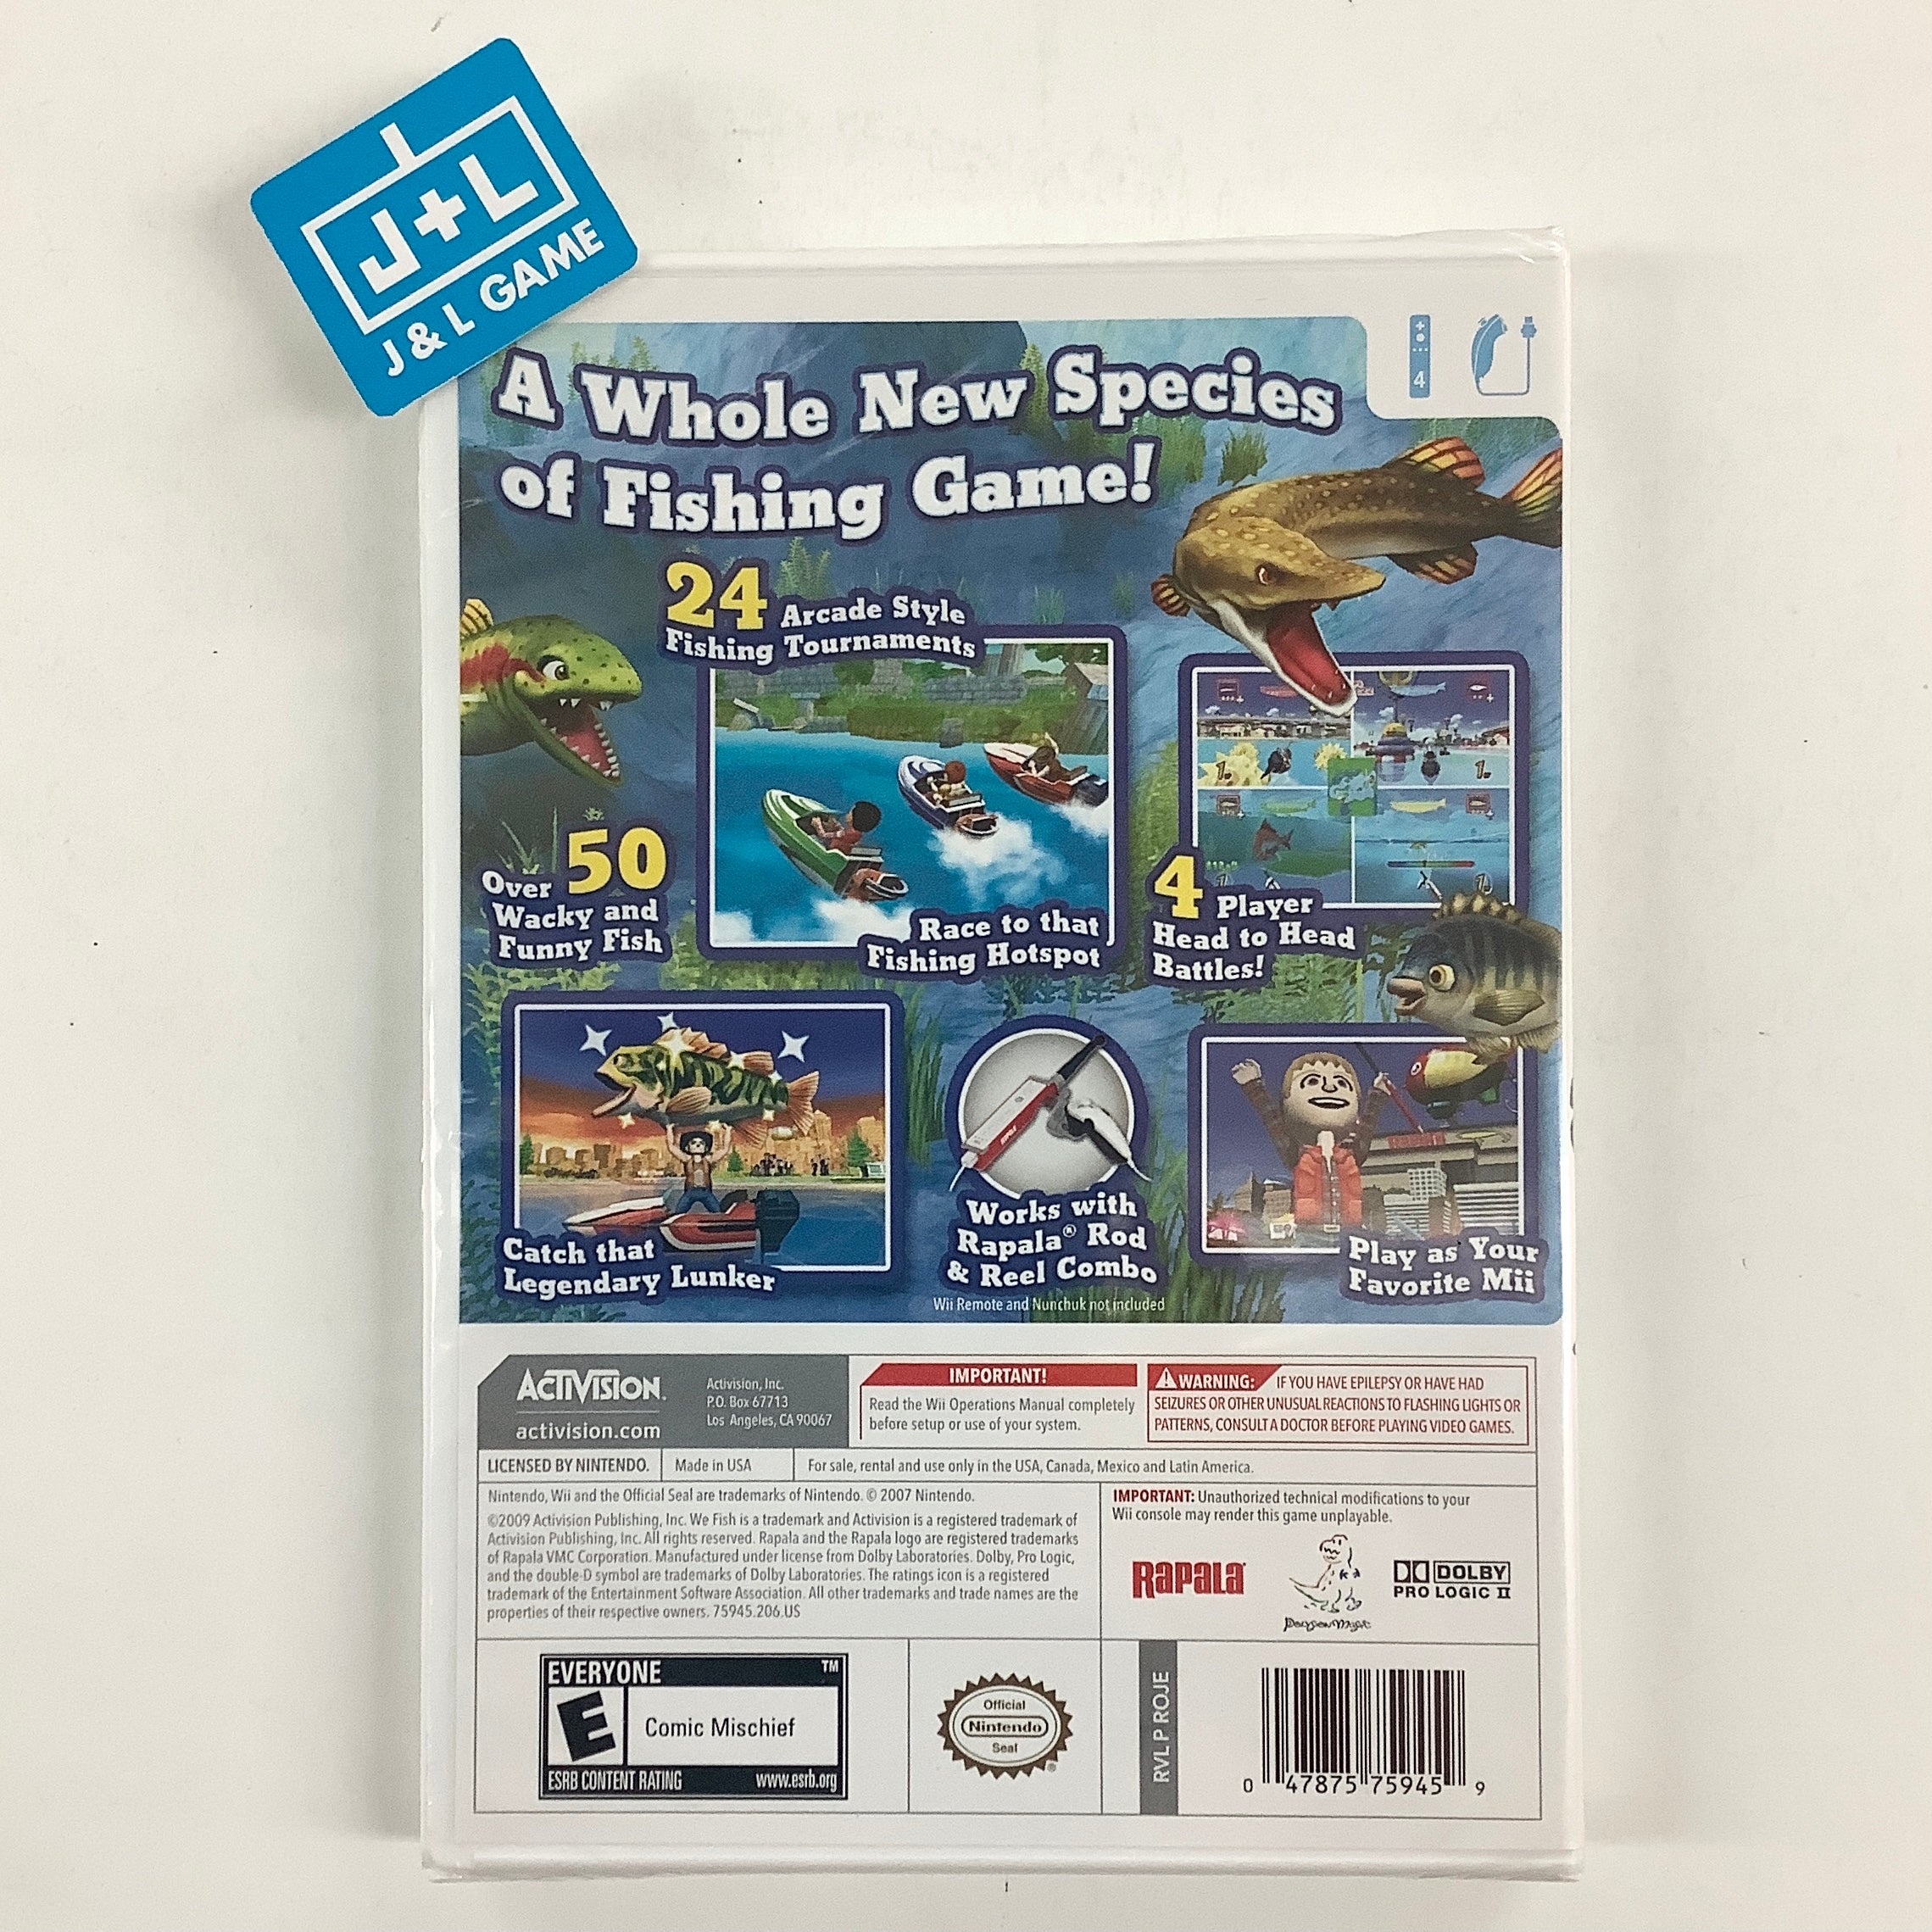 Rapala: We Fish - Nintendo Wii